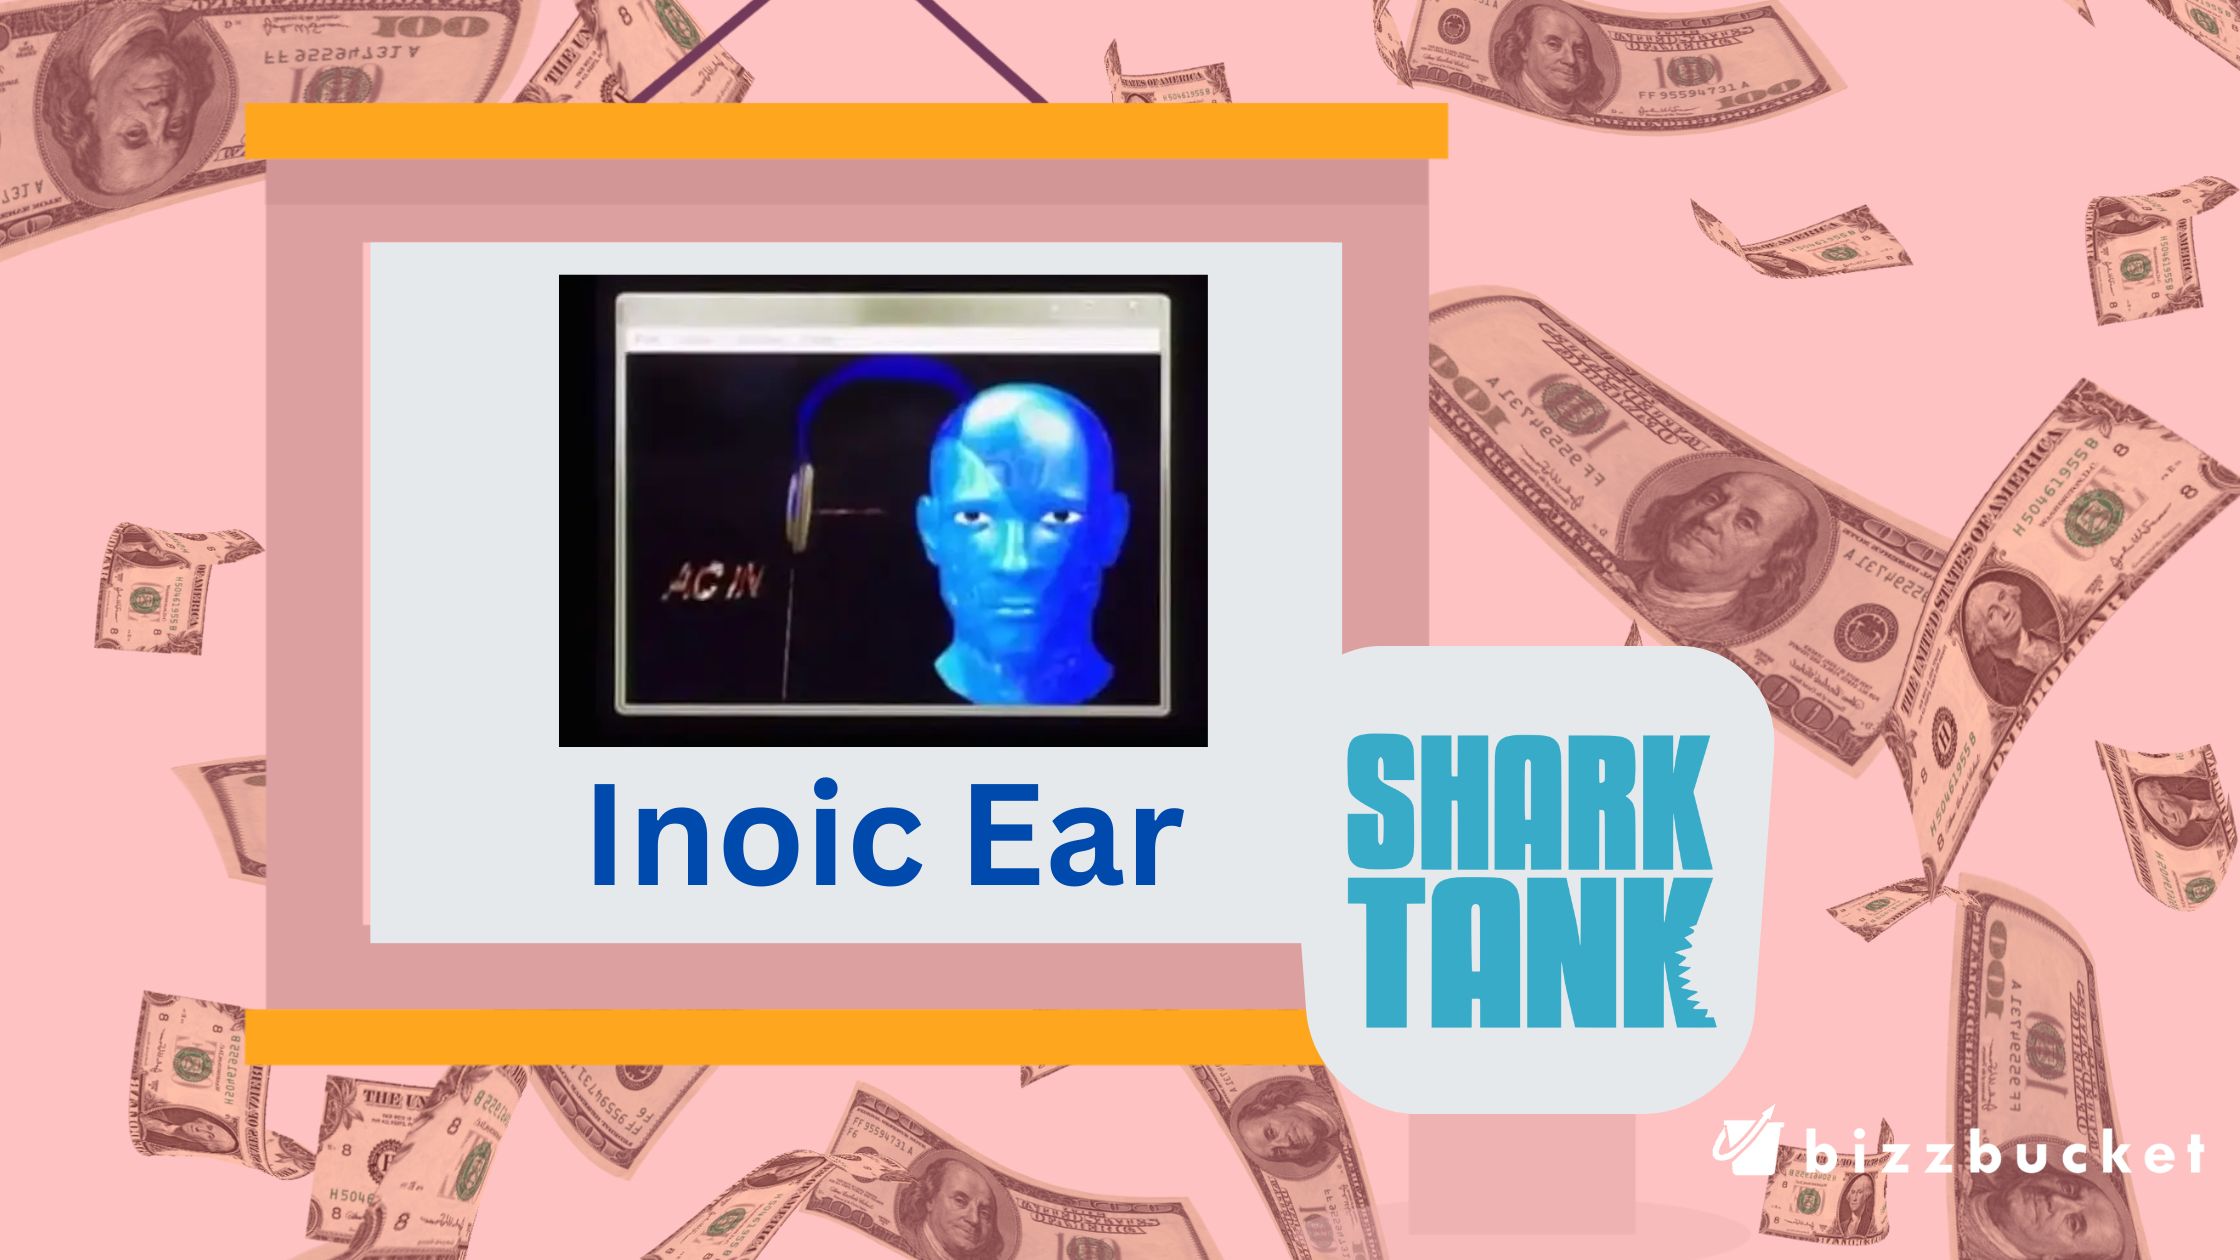 Ionic Ear Shark Tank Update